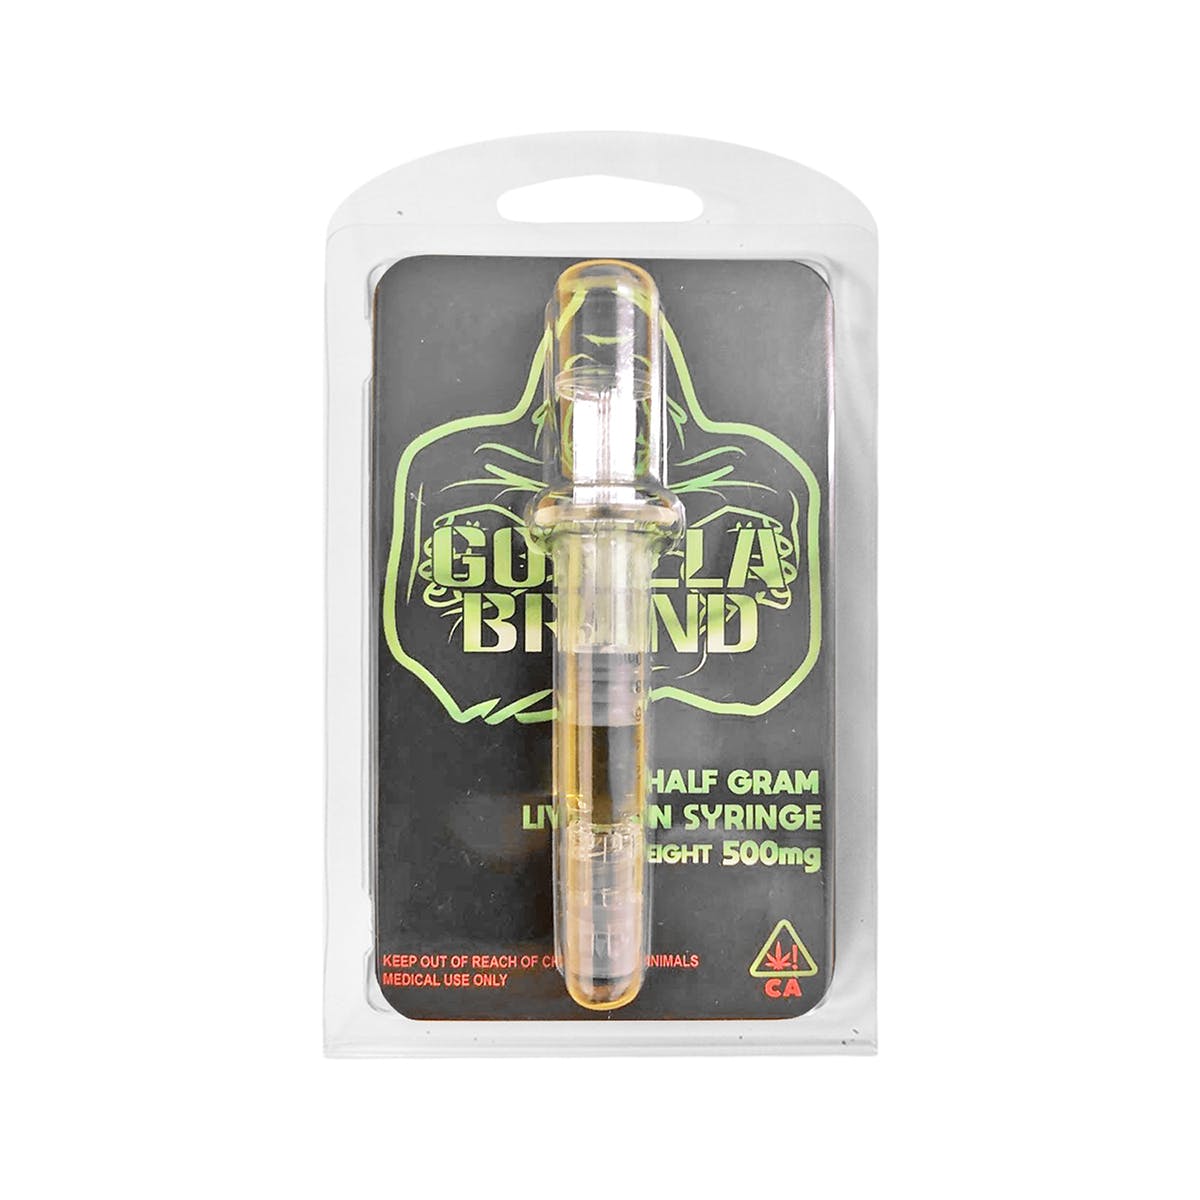 marijuana-dispensaries-green-gorillaz-express-in-los-angeles-bubblegum-live-resin-syringe